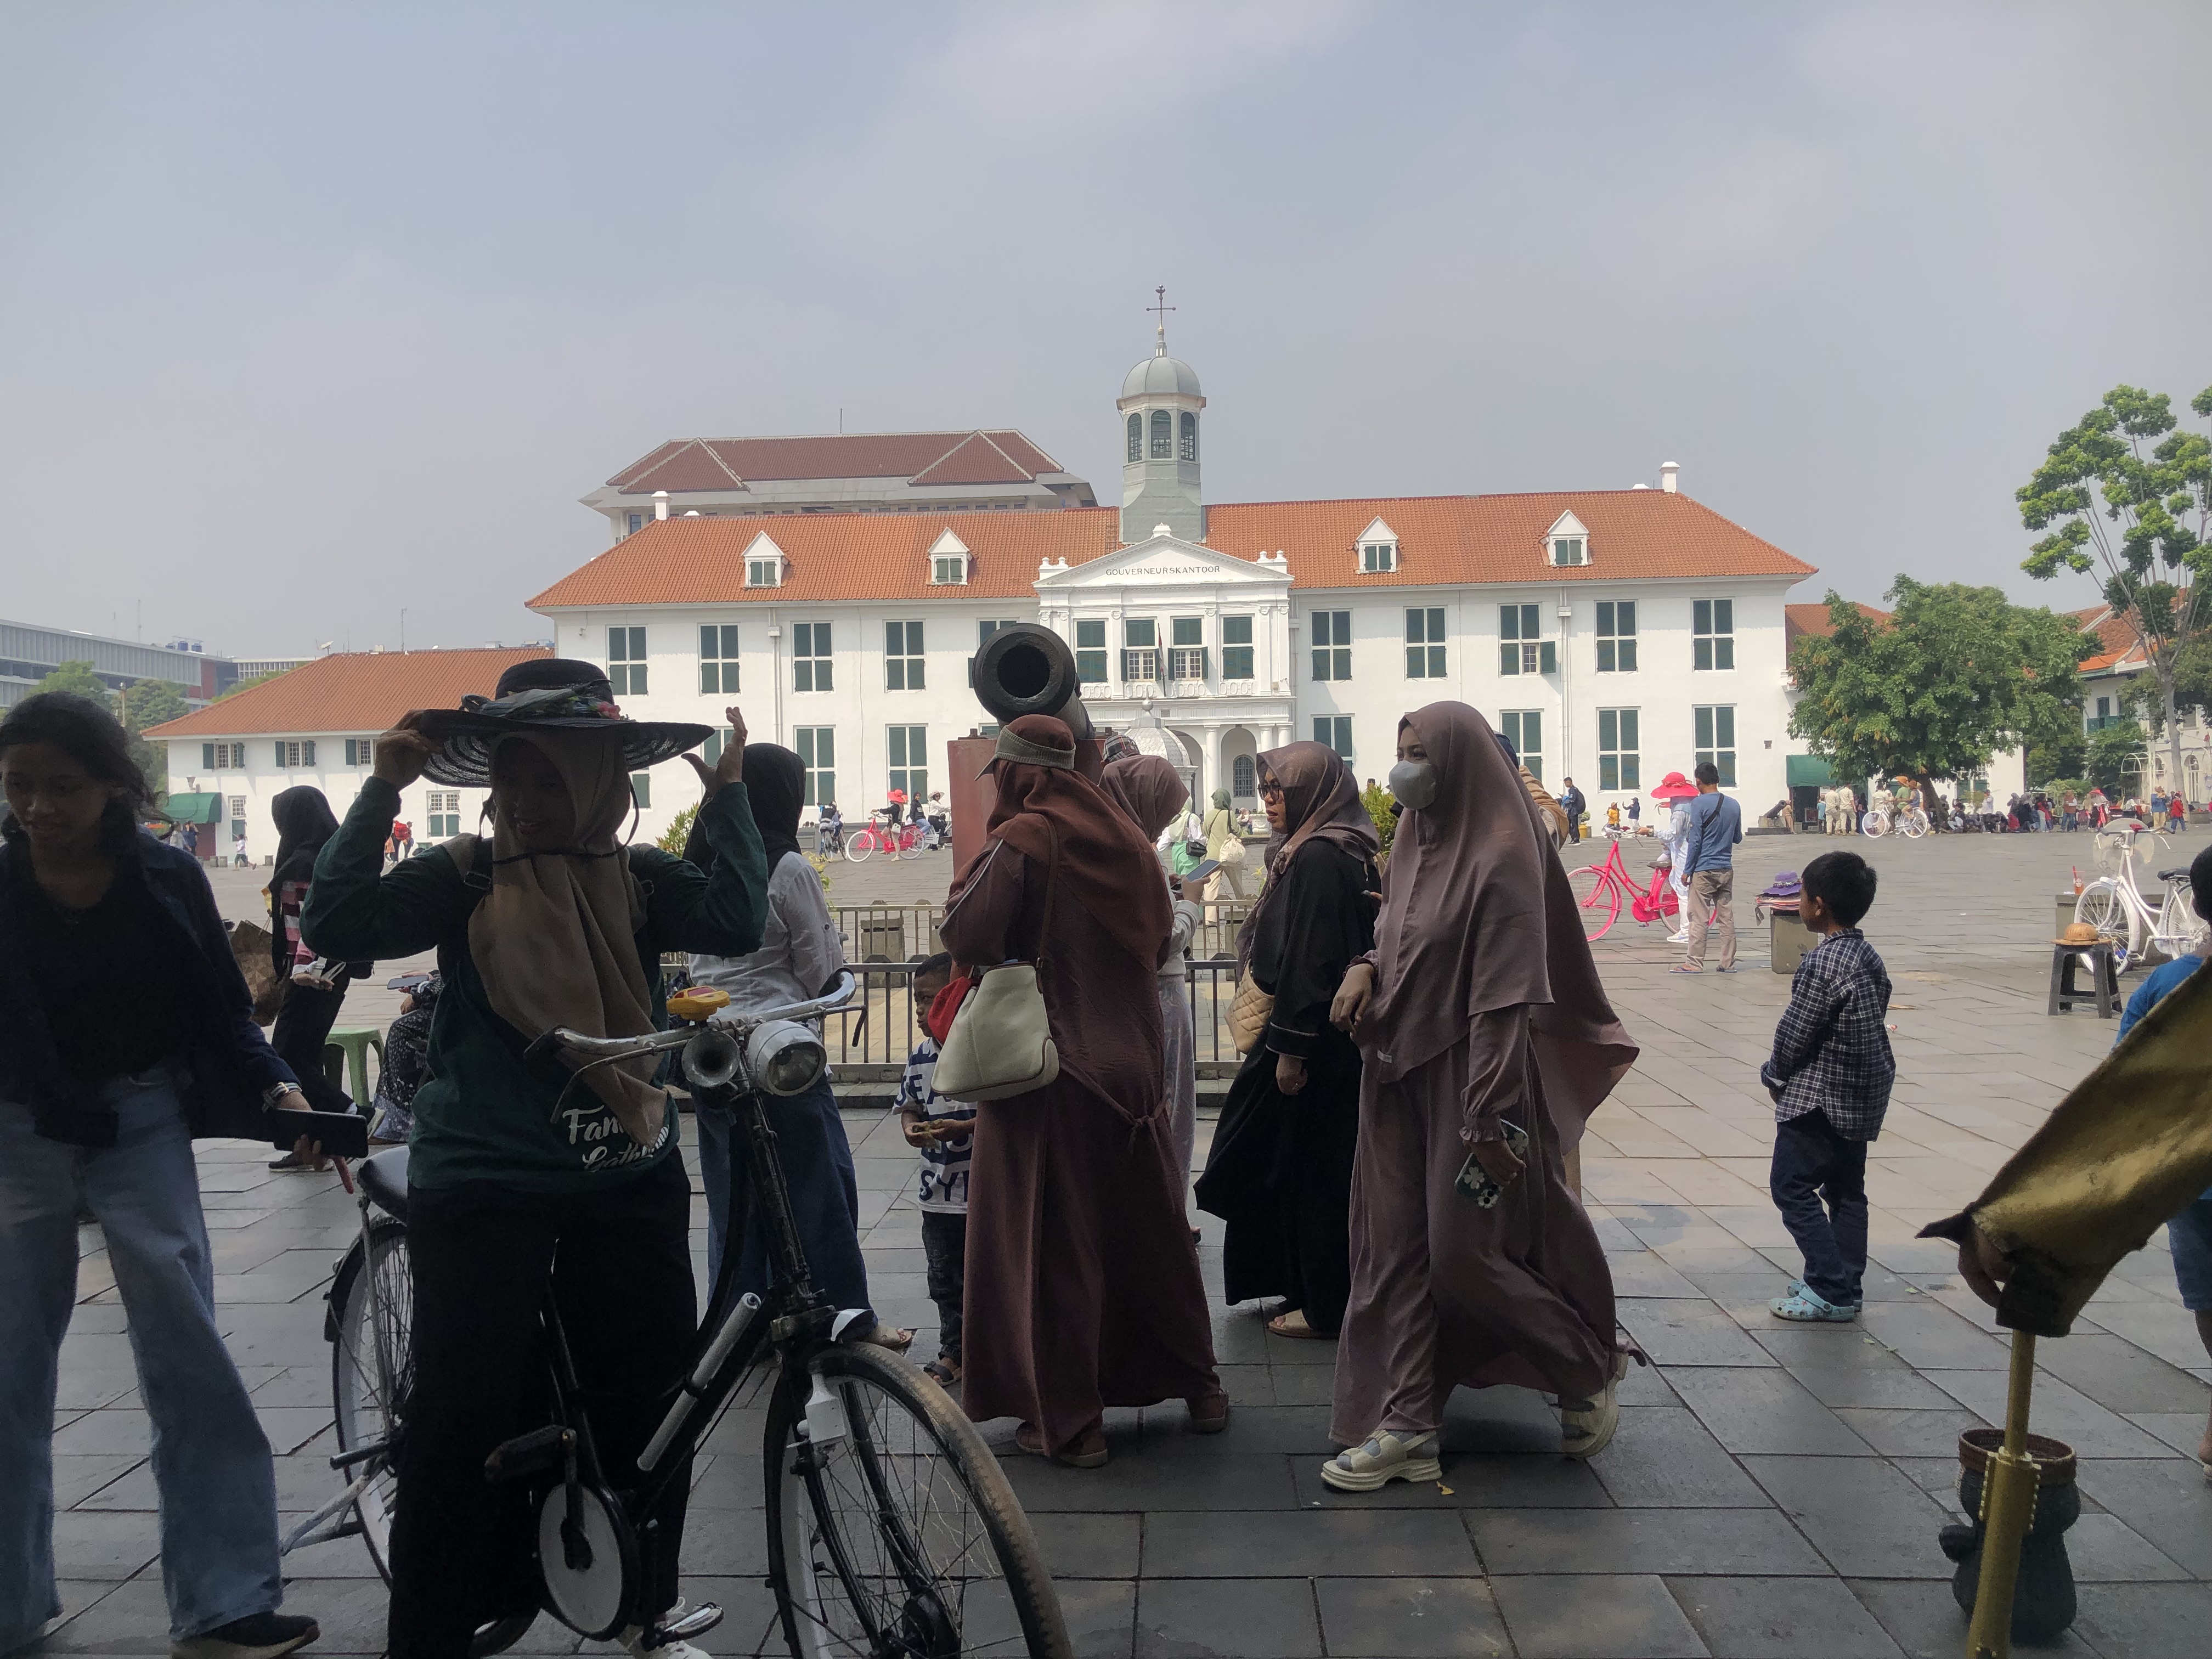 Wisata Kota Tua Jakarta Ramai Pengunjung Liburan Sekolah